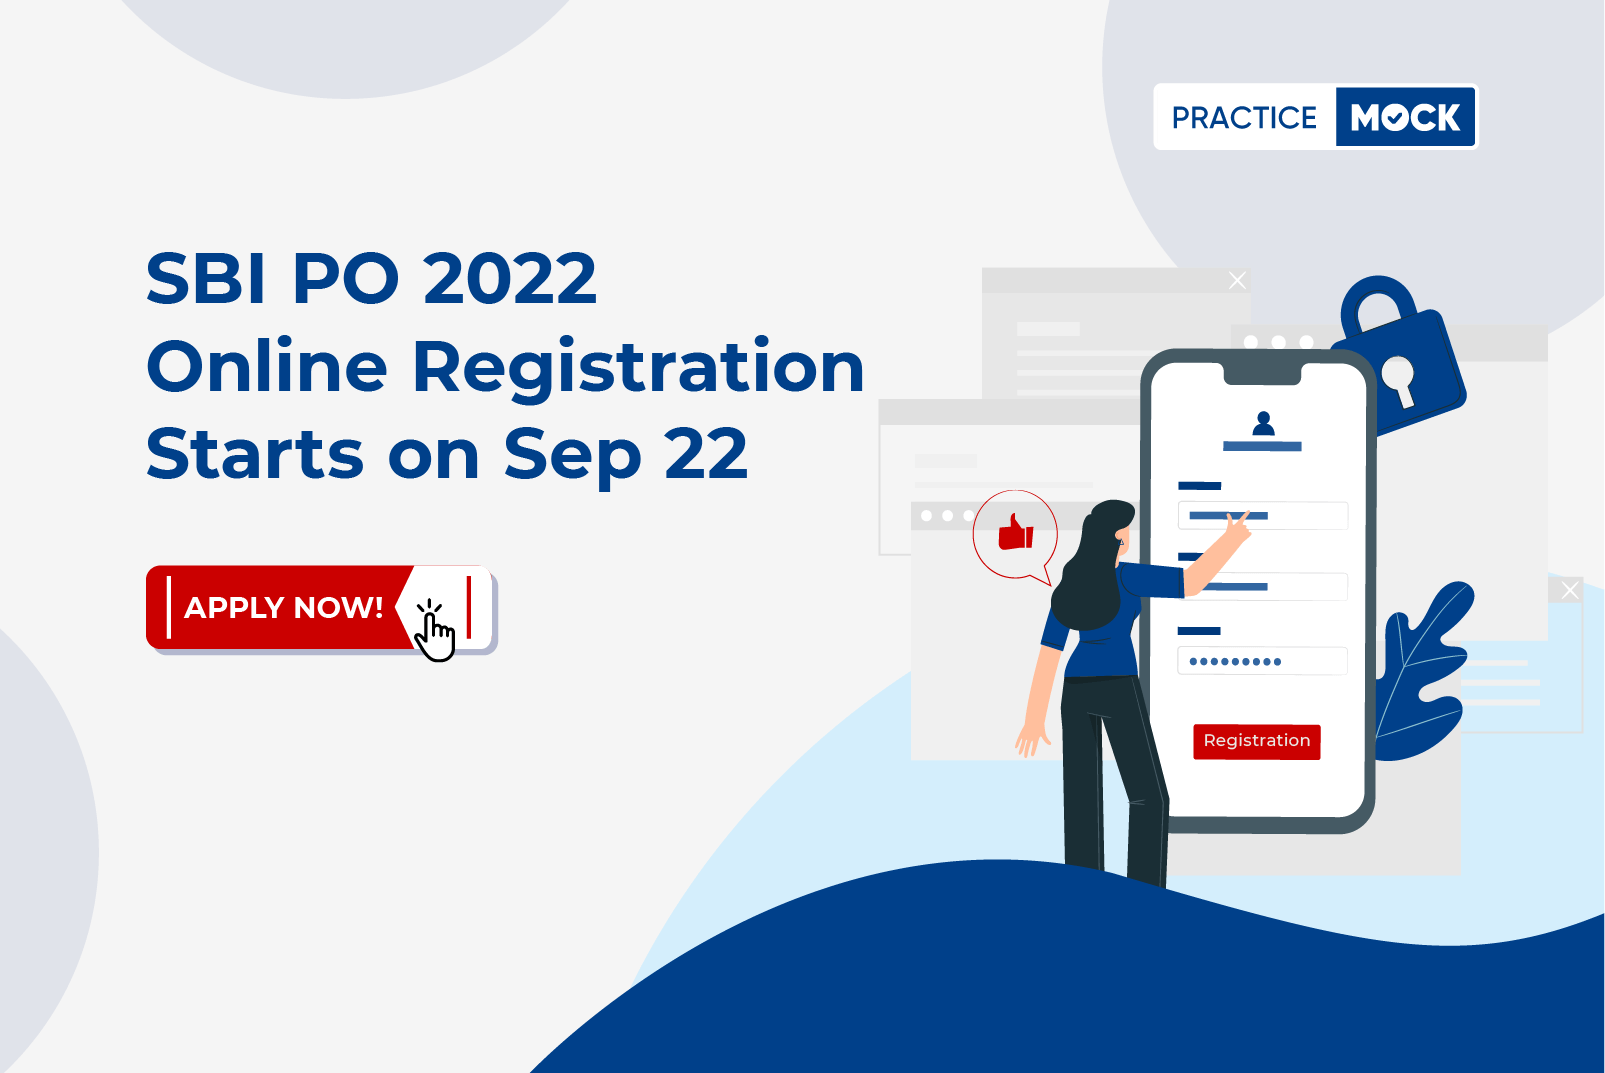 SBI PO 2022 Online Registration Starts on Sep 22 Apply Now PracticeMock